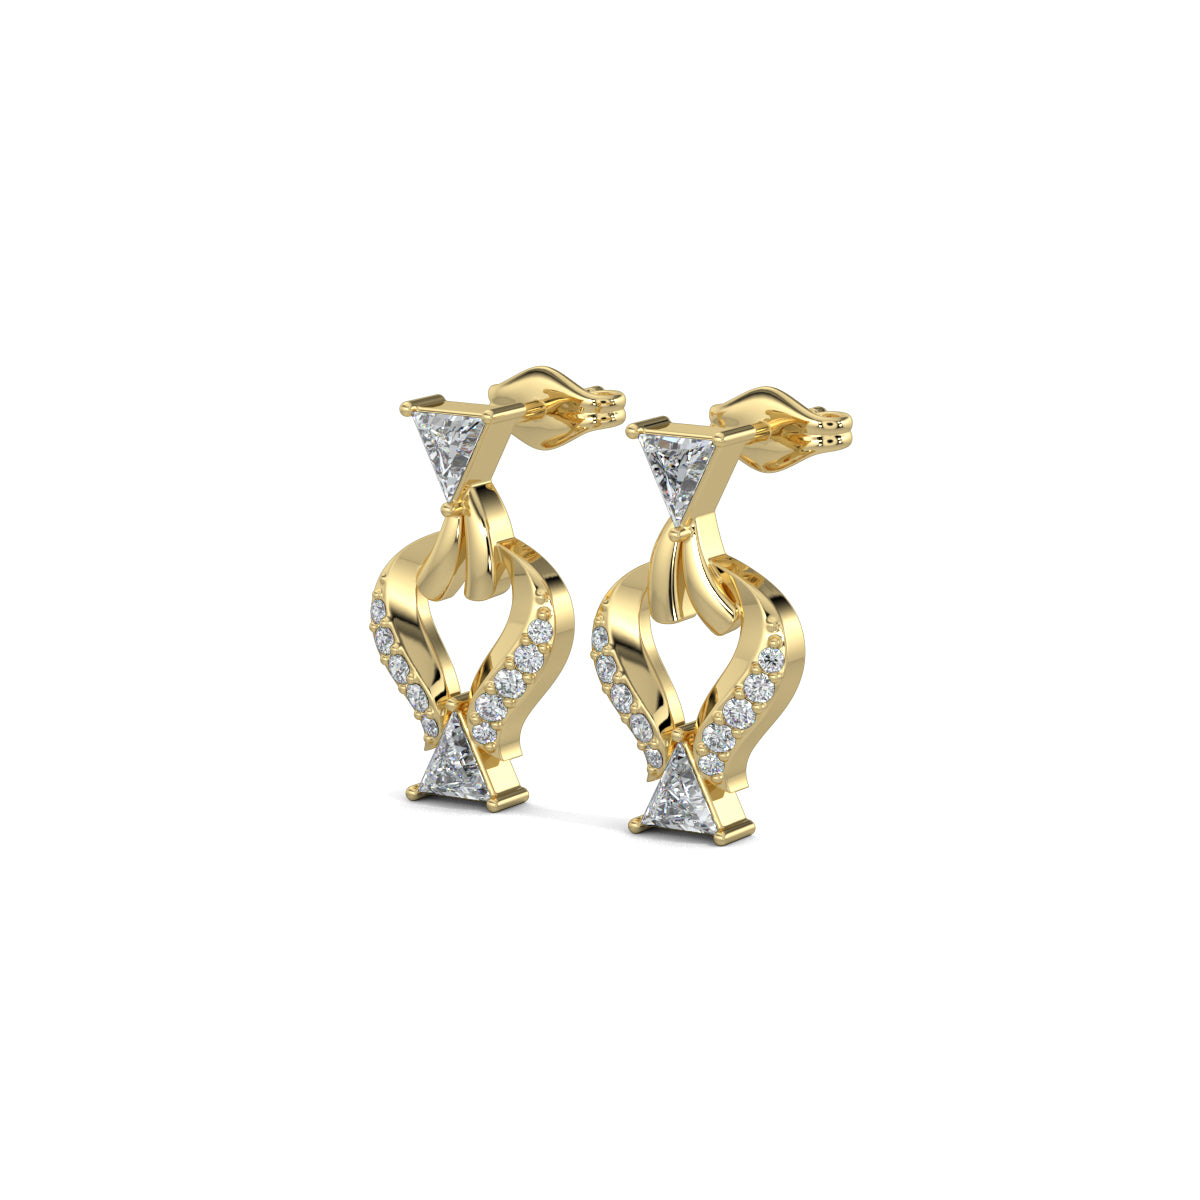 Yellow Gold, Diamond Earrings, Trillium Sparkle Earrings, Mid-length Earrings, Natural Diamonds, Lab-grown Diamonds, Trillion-cut Diamonds, Round Diamonds, Sophisticated Earrings, Elegant Jewelry